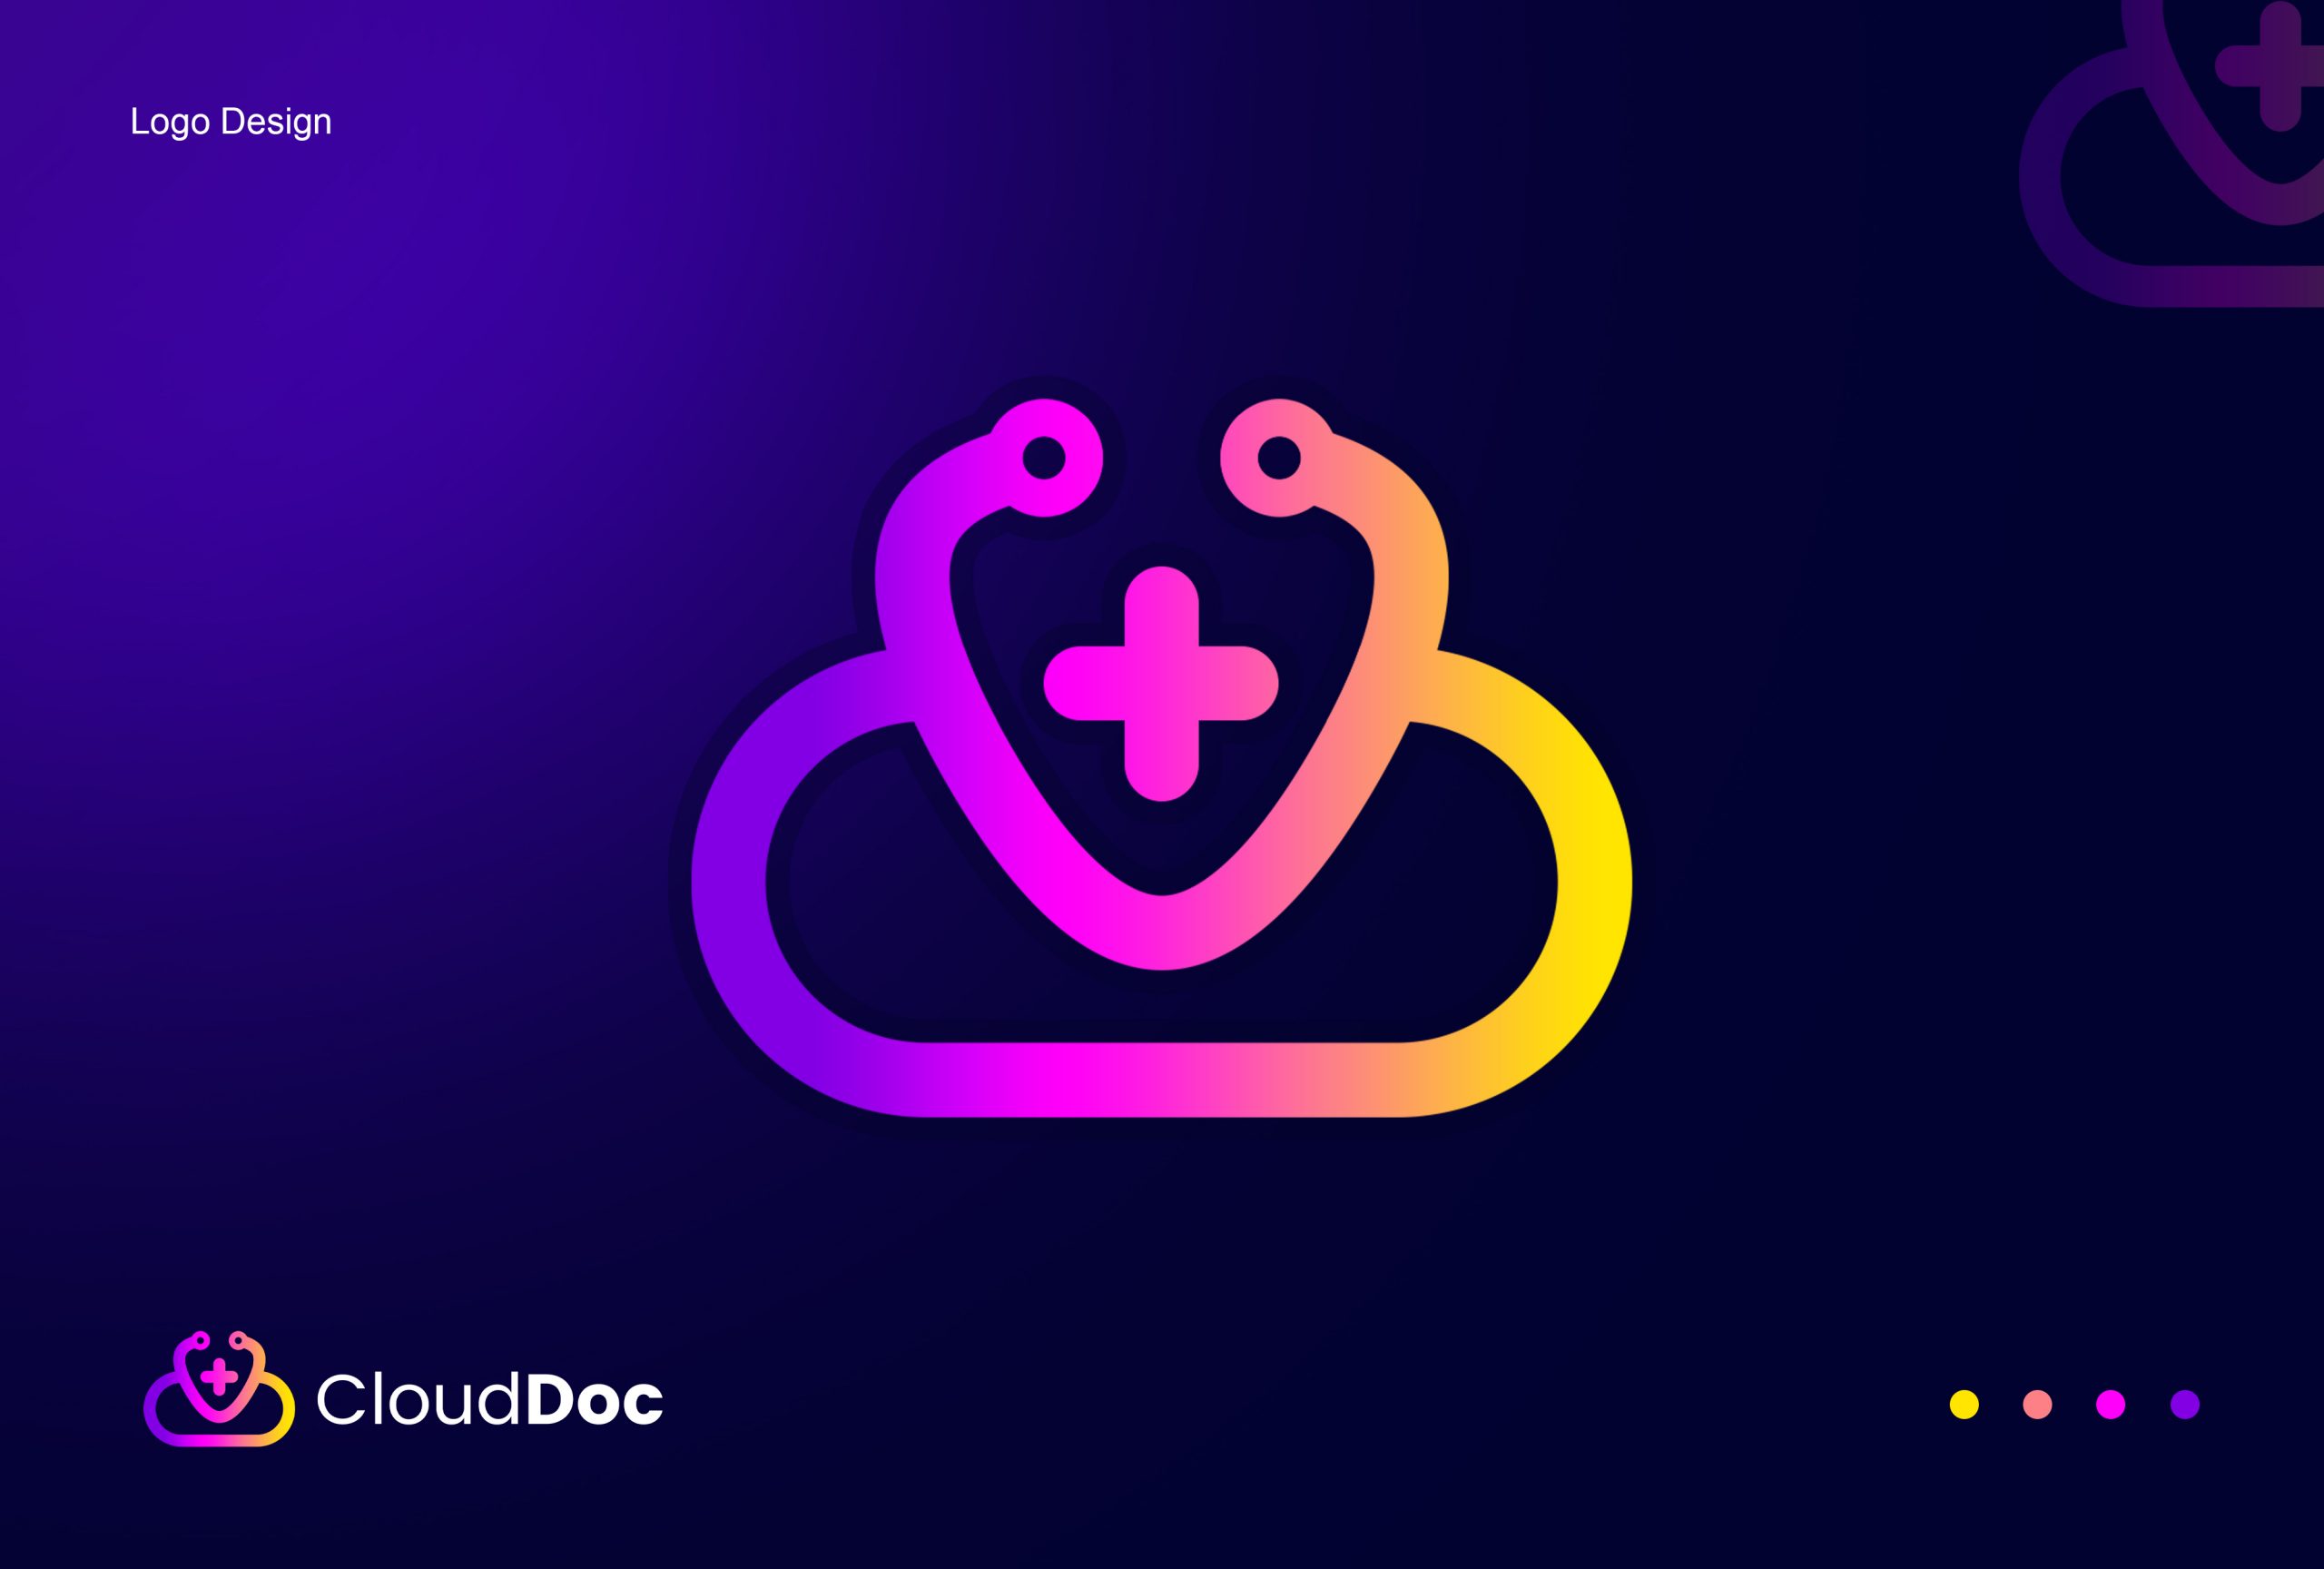 CloudDoc Logo Design Download